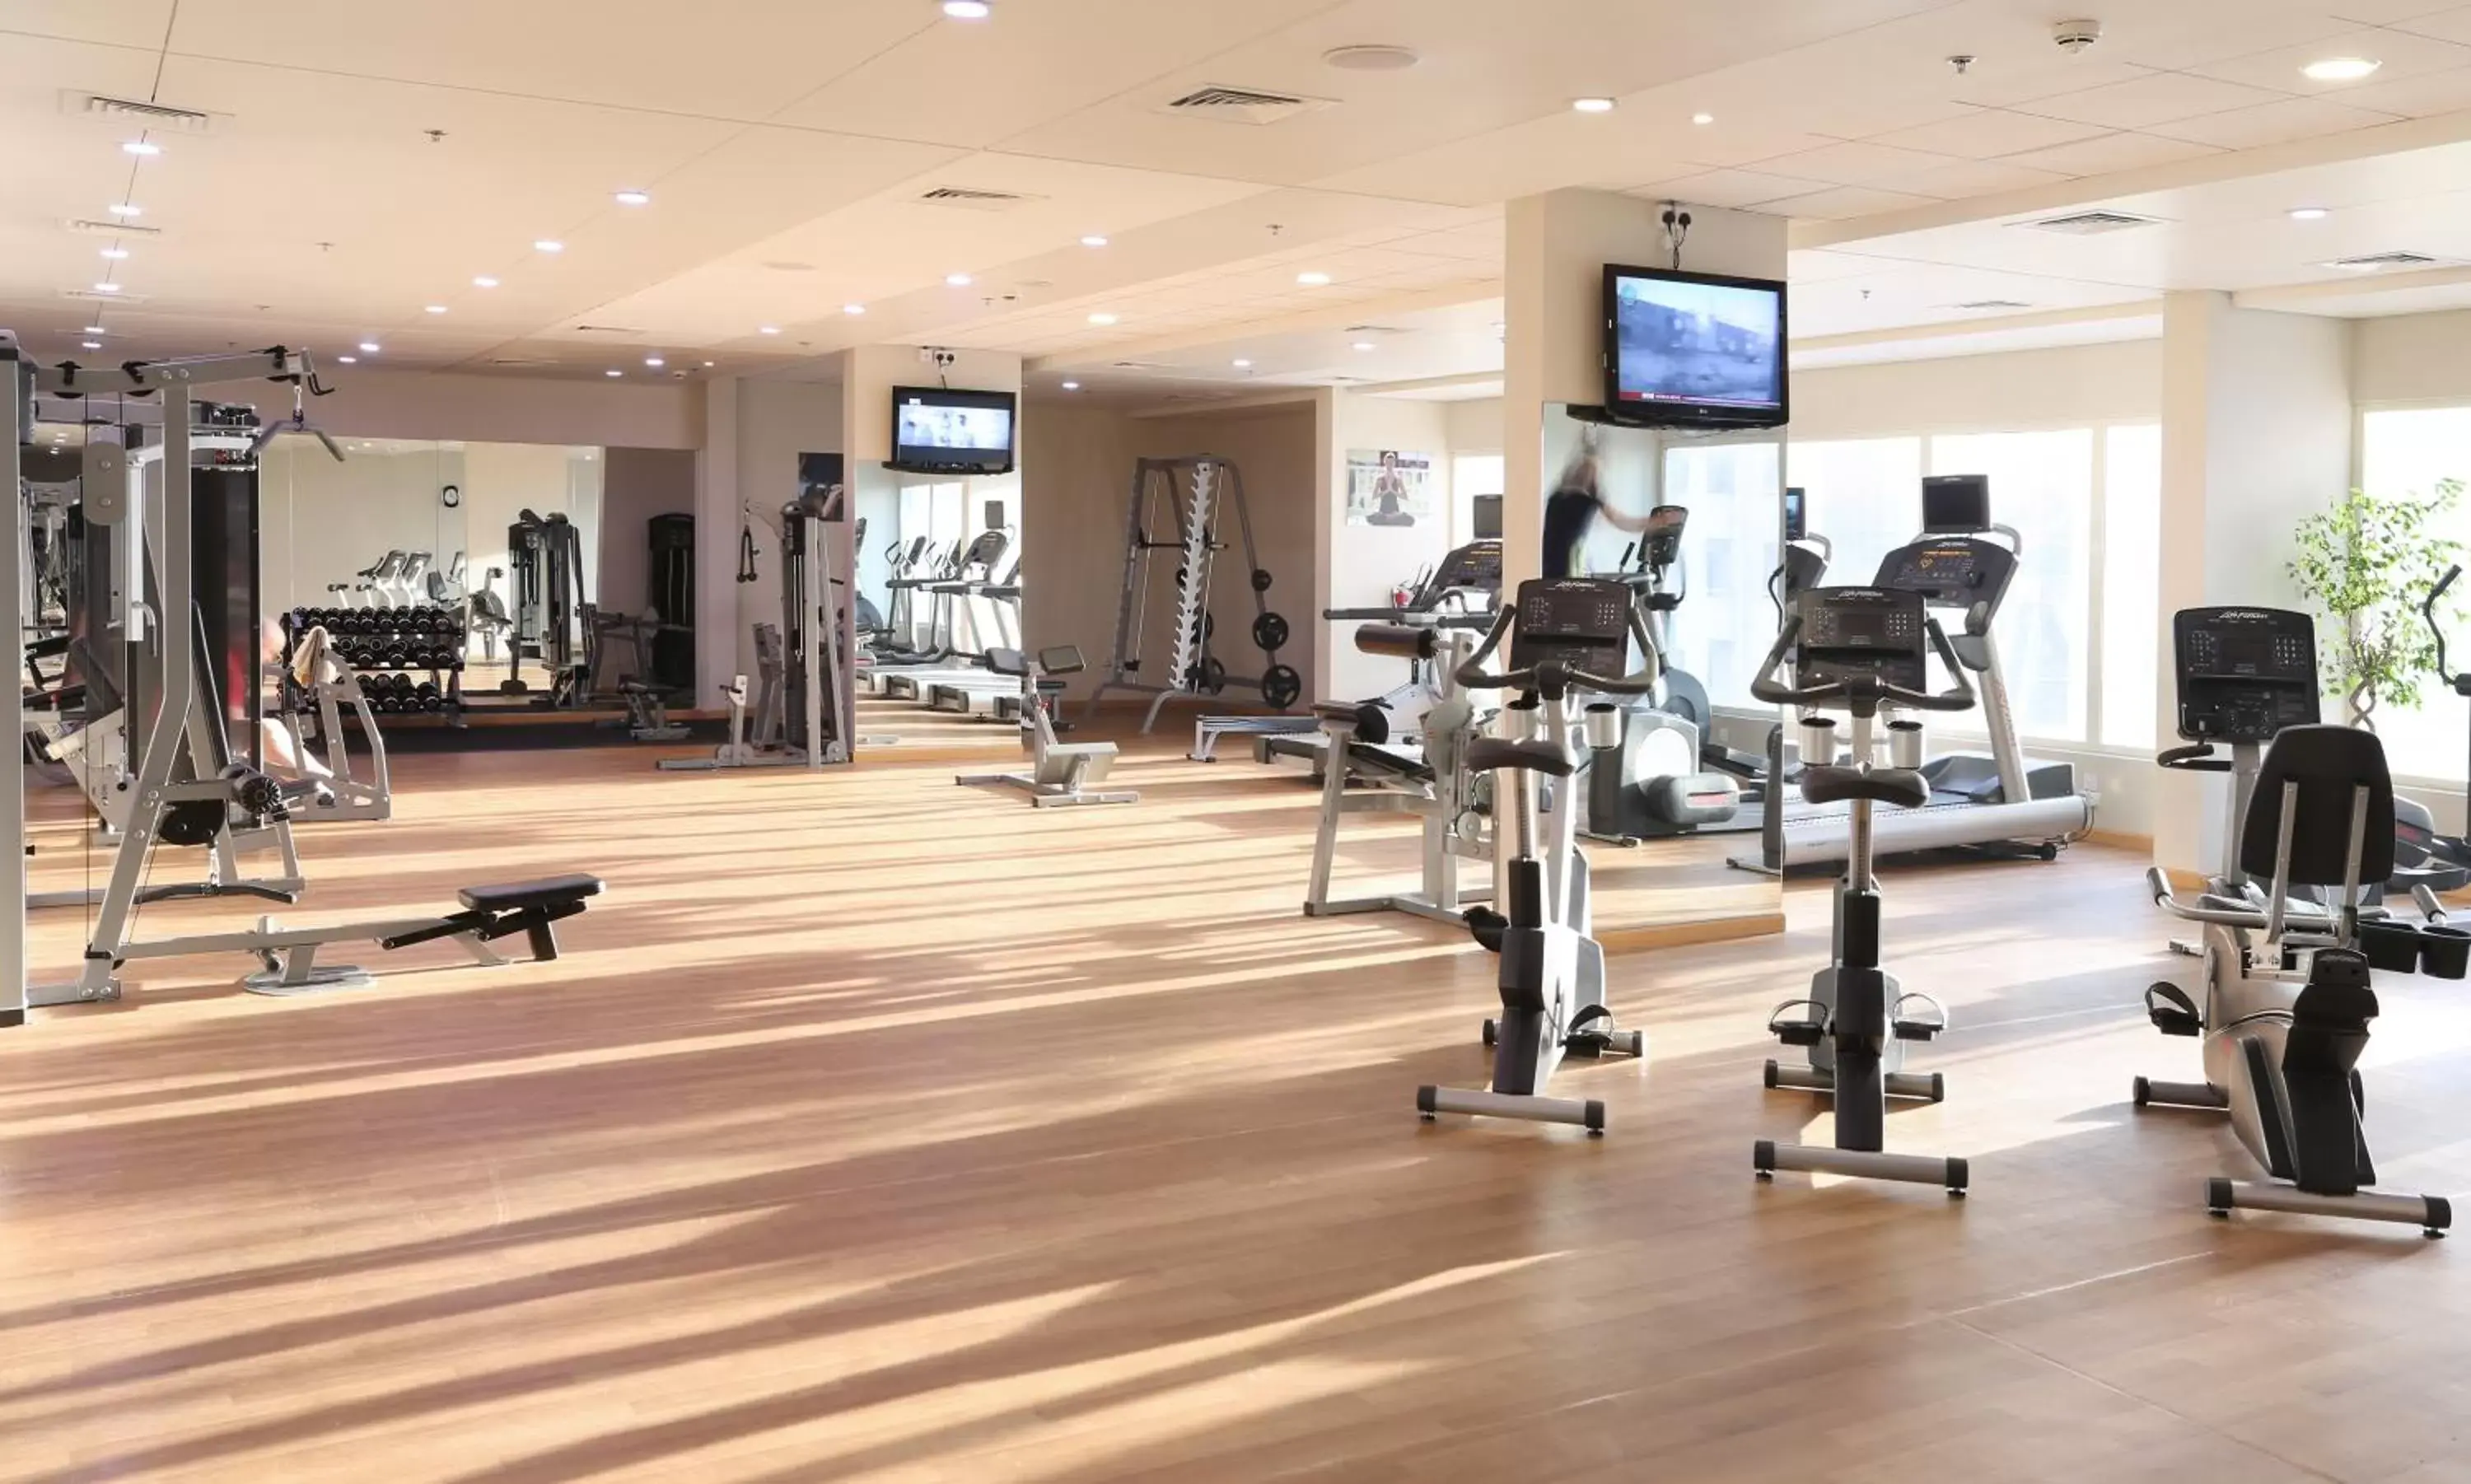 Fitness centre/facilities, Fitness Center/Facilities in The Tower Plaza Hotel Dubai